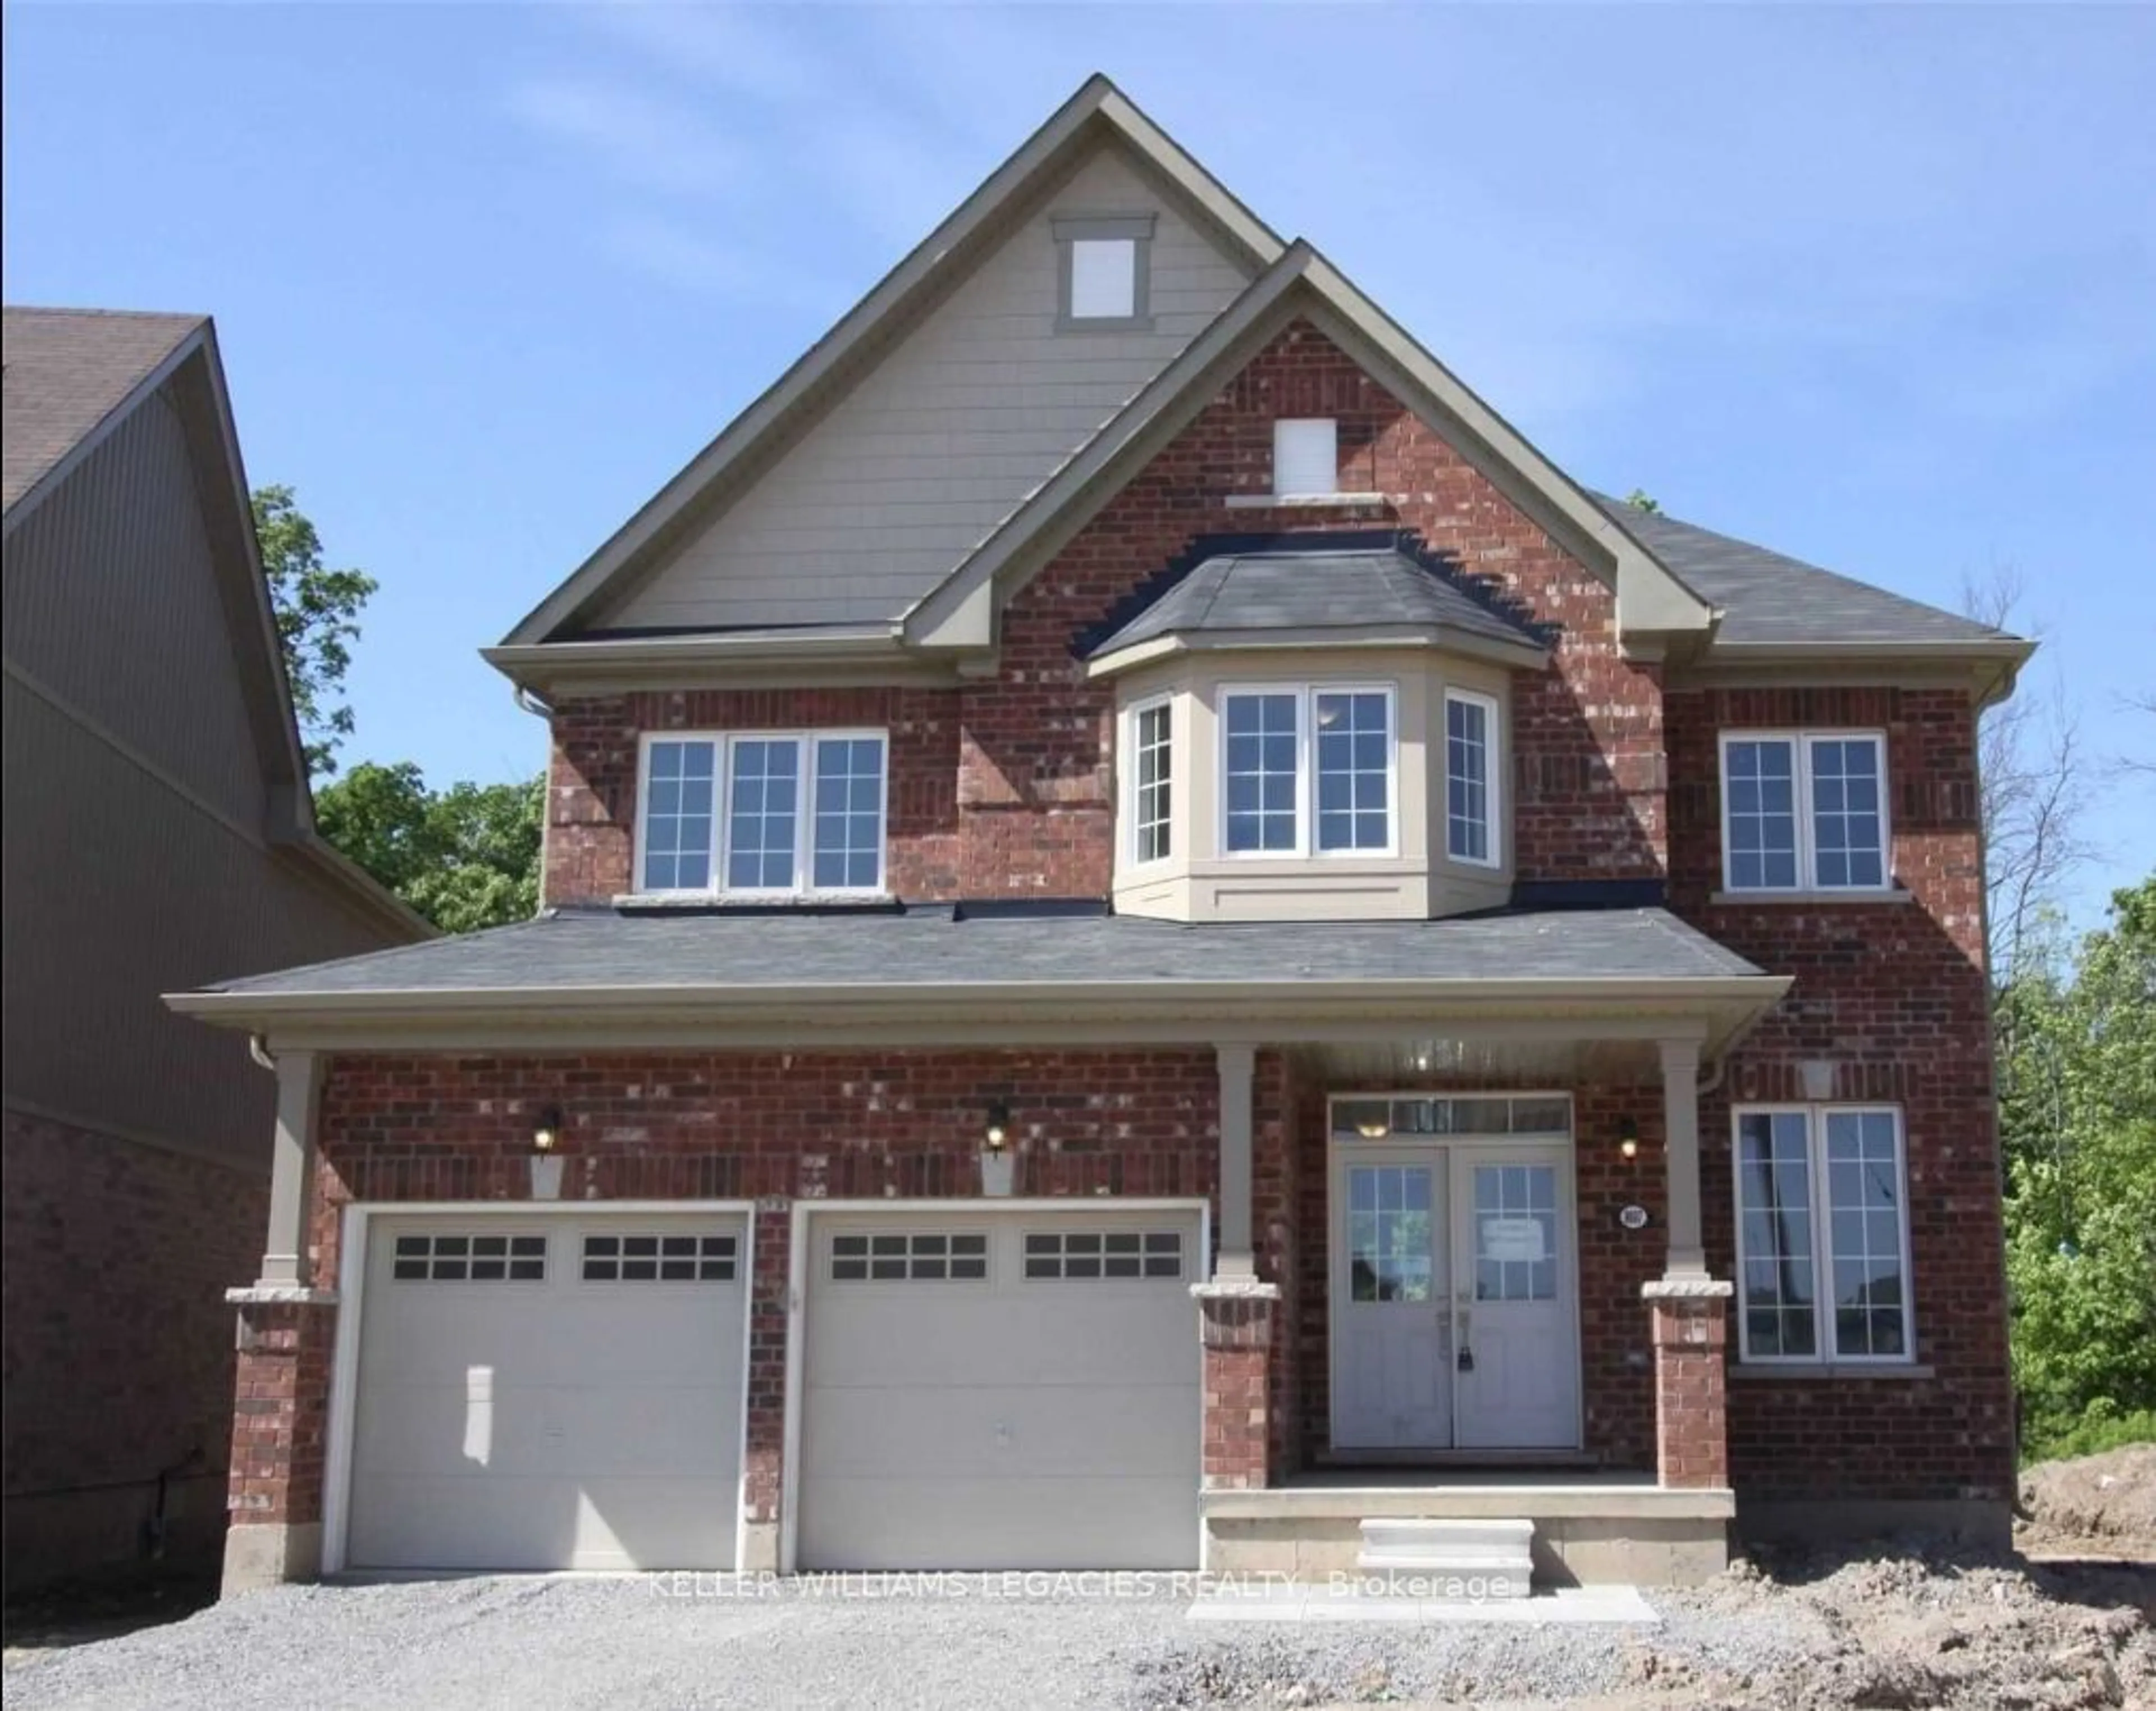 Home with brick exterior material for 8607 Chickory Tr, Niagara Falls Ontario L2H 3S5